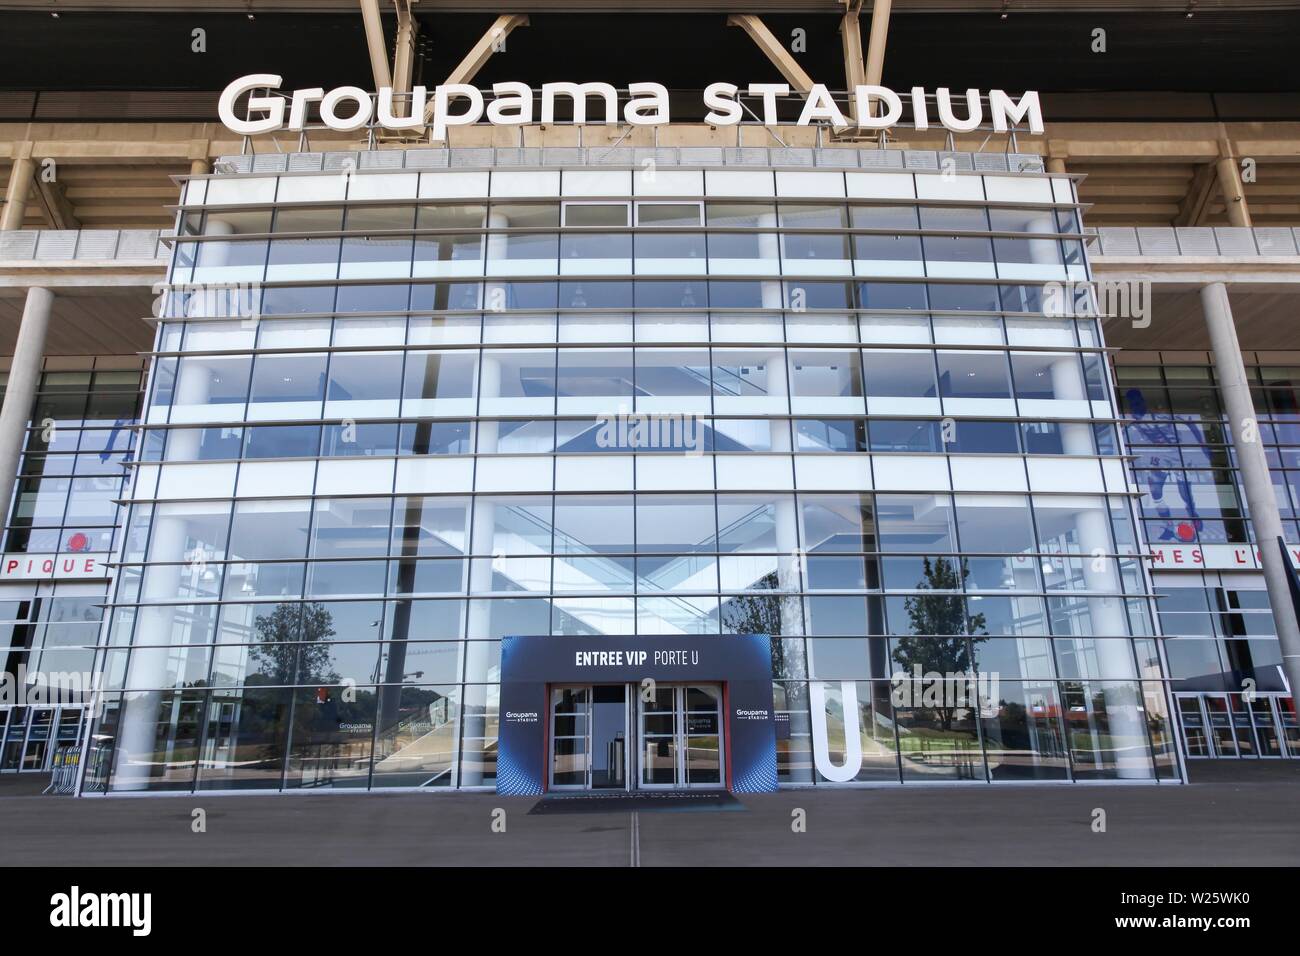 Groupama stadium hi-res stock photography and images - Alamy